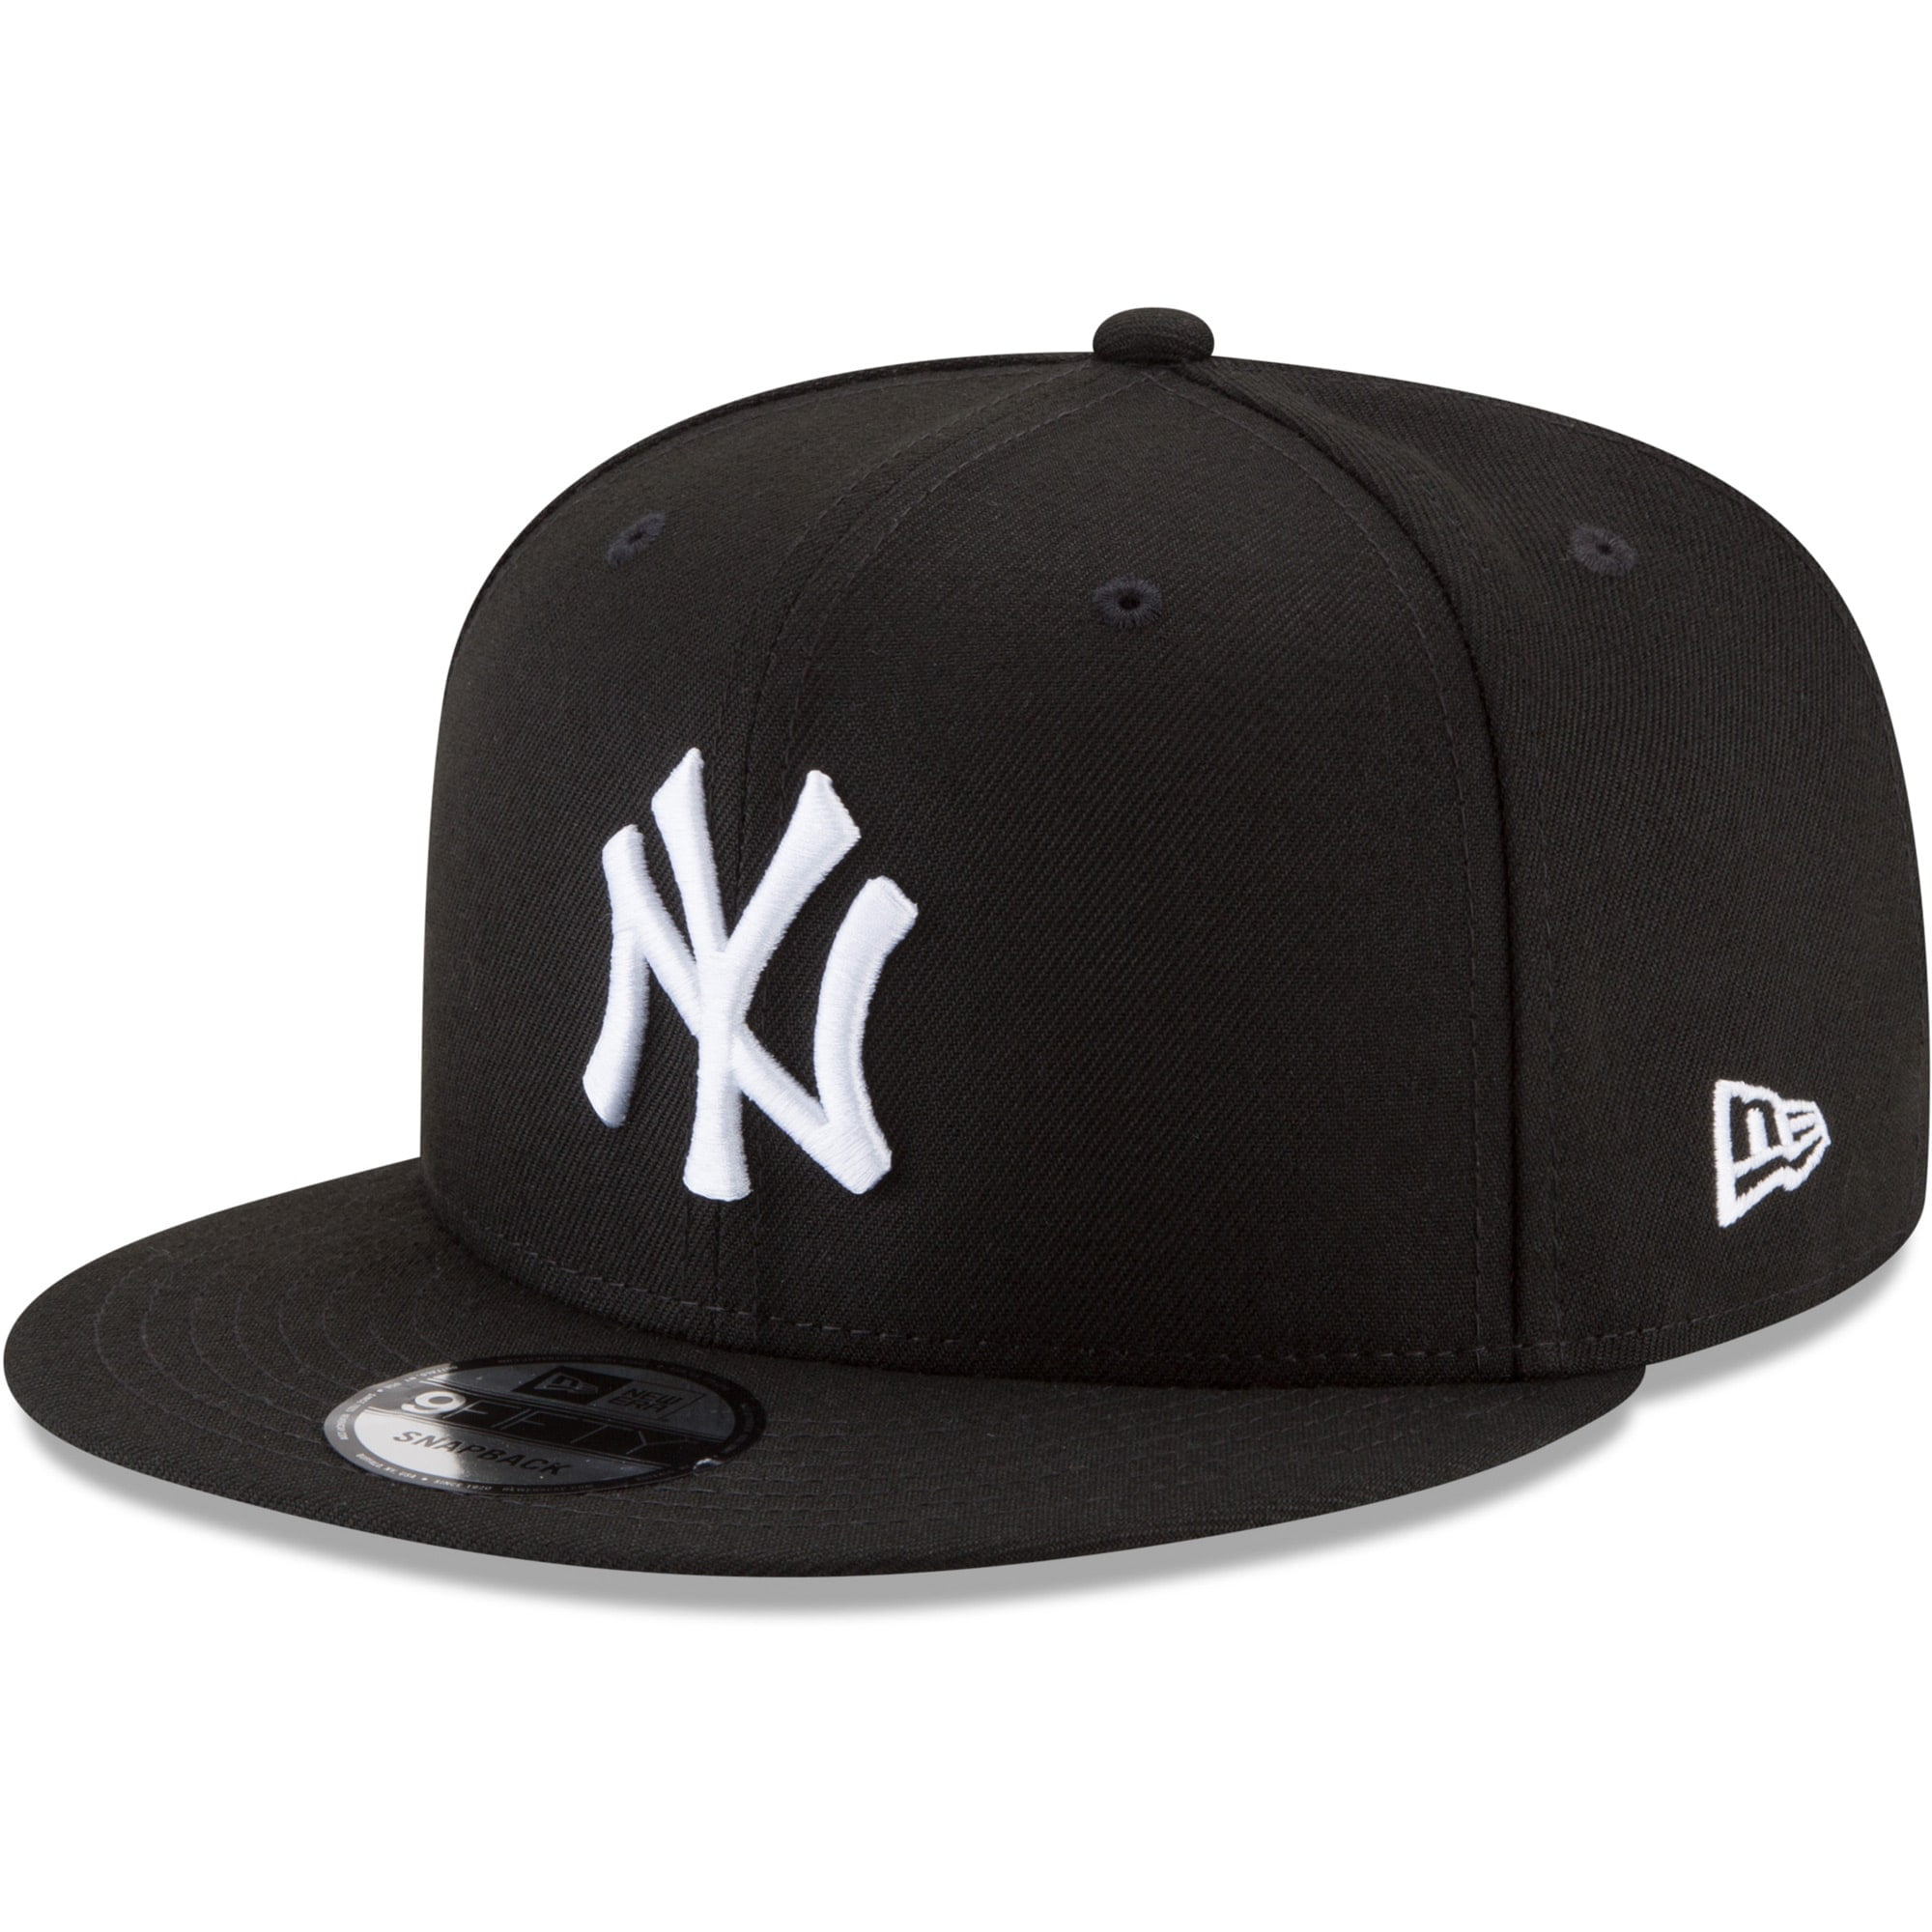 Money premium baseball hip hop NY Love snapback caps flat peak fitted hats 